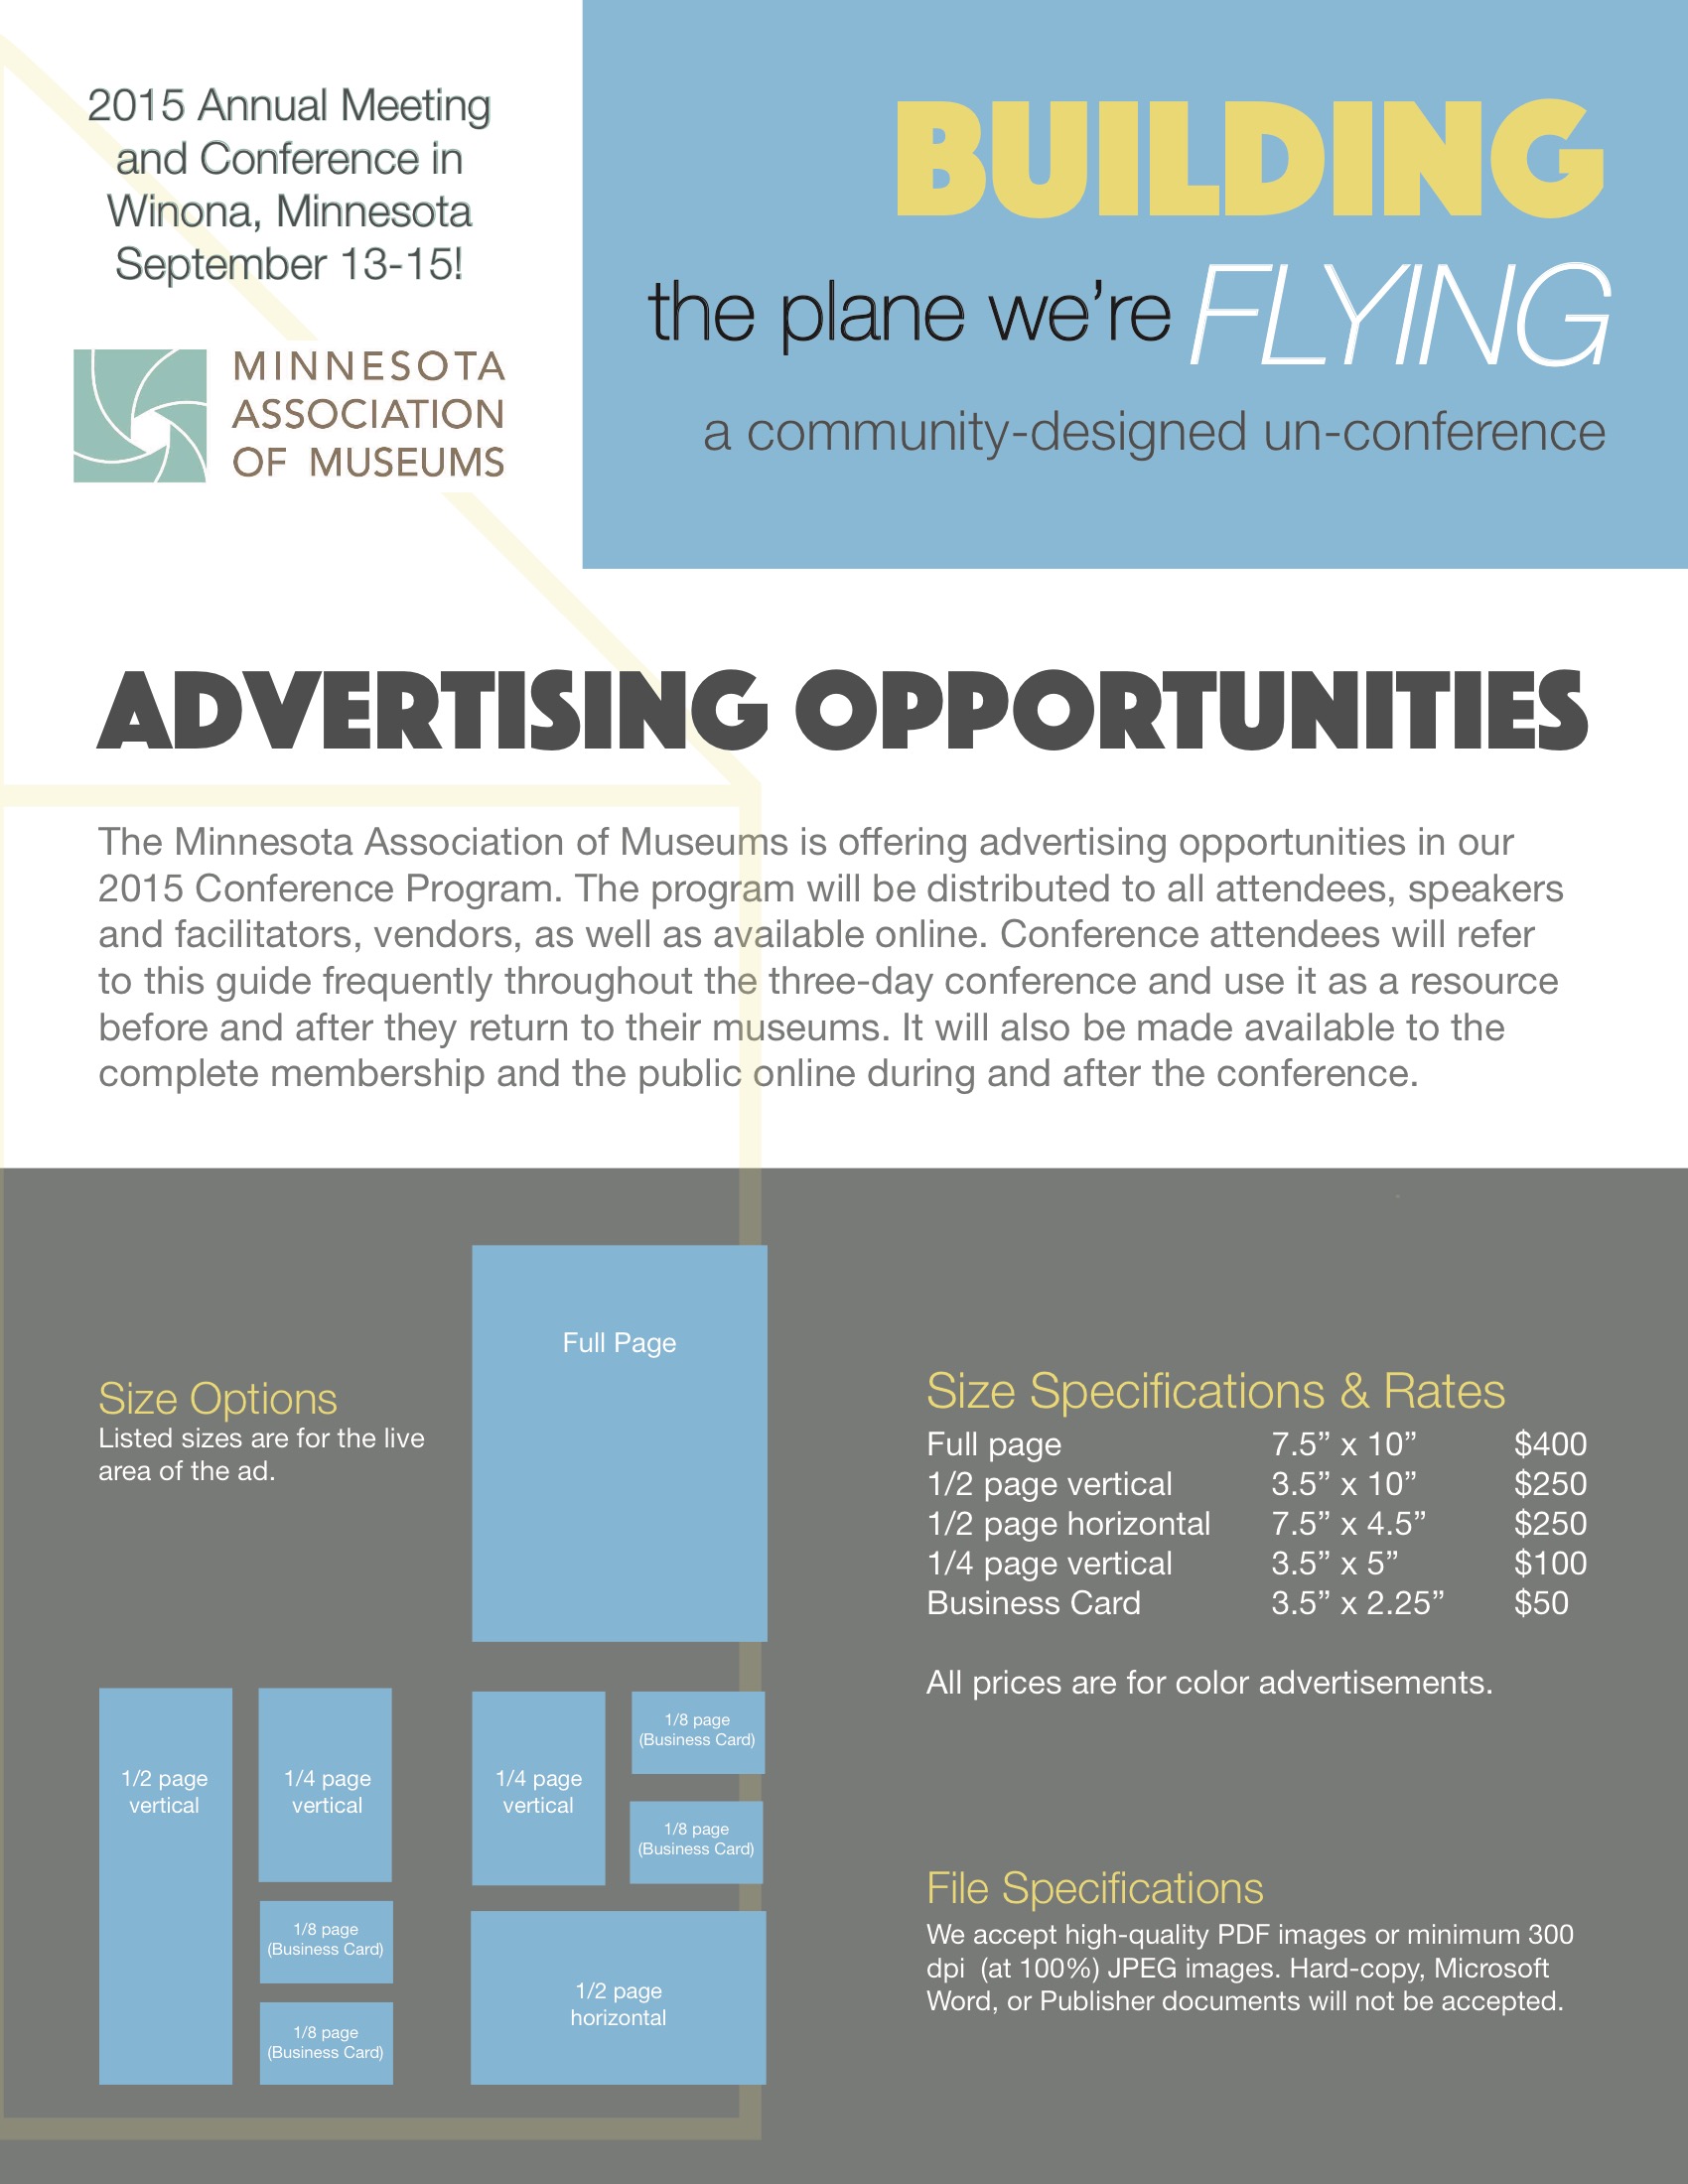 2015 MAM Ad & Sponsorship Opportunities 3.jpeg